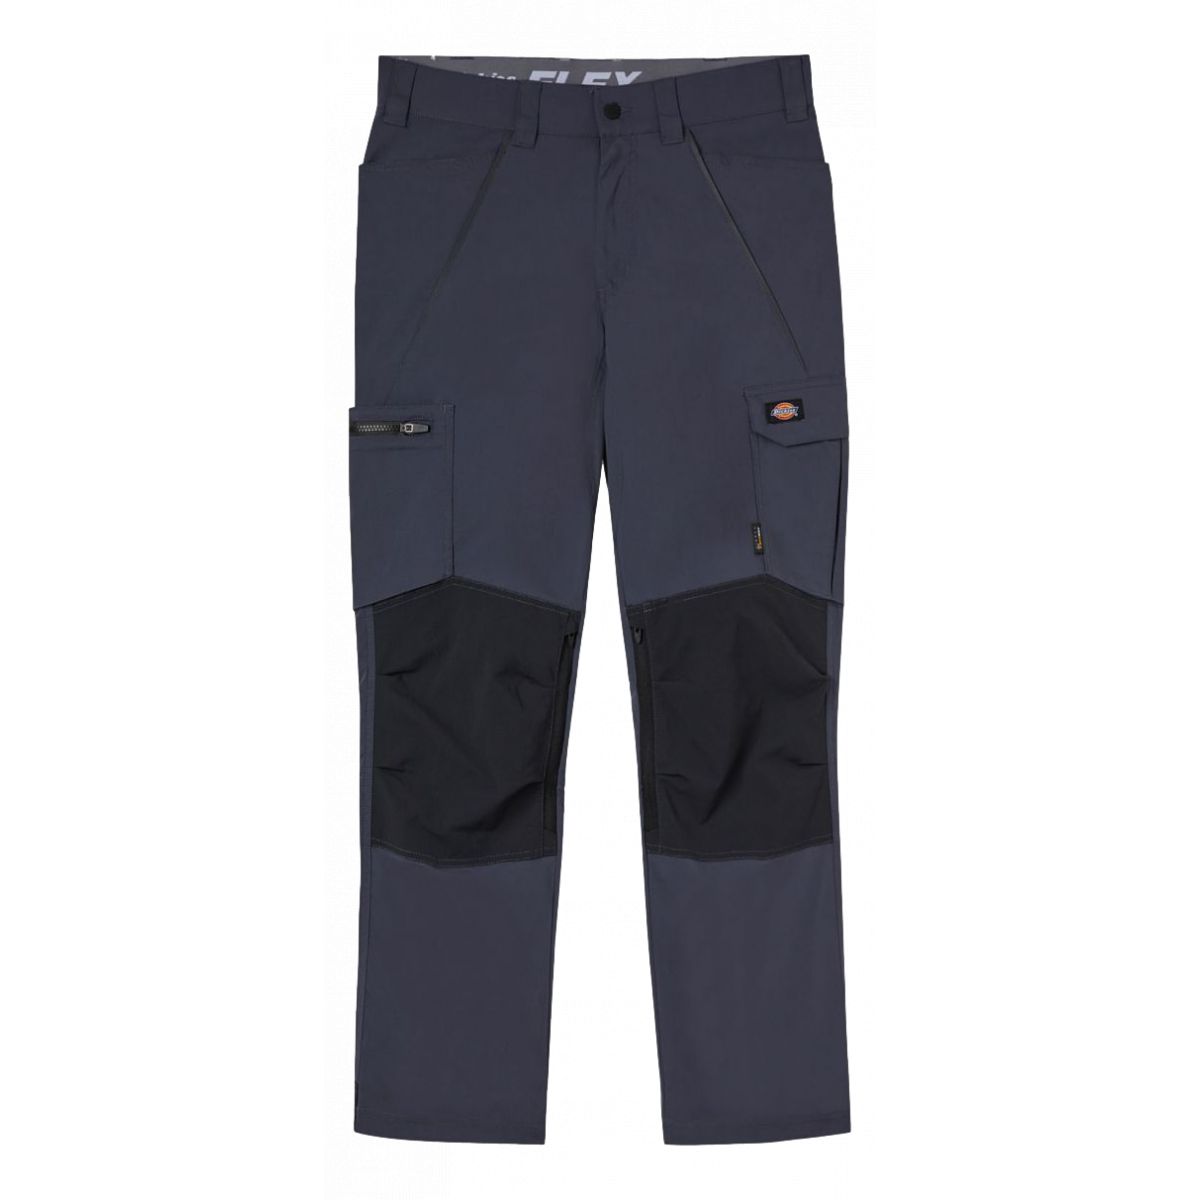 Pantalon léger Flex Gris - Dickies - Taille 40 0